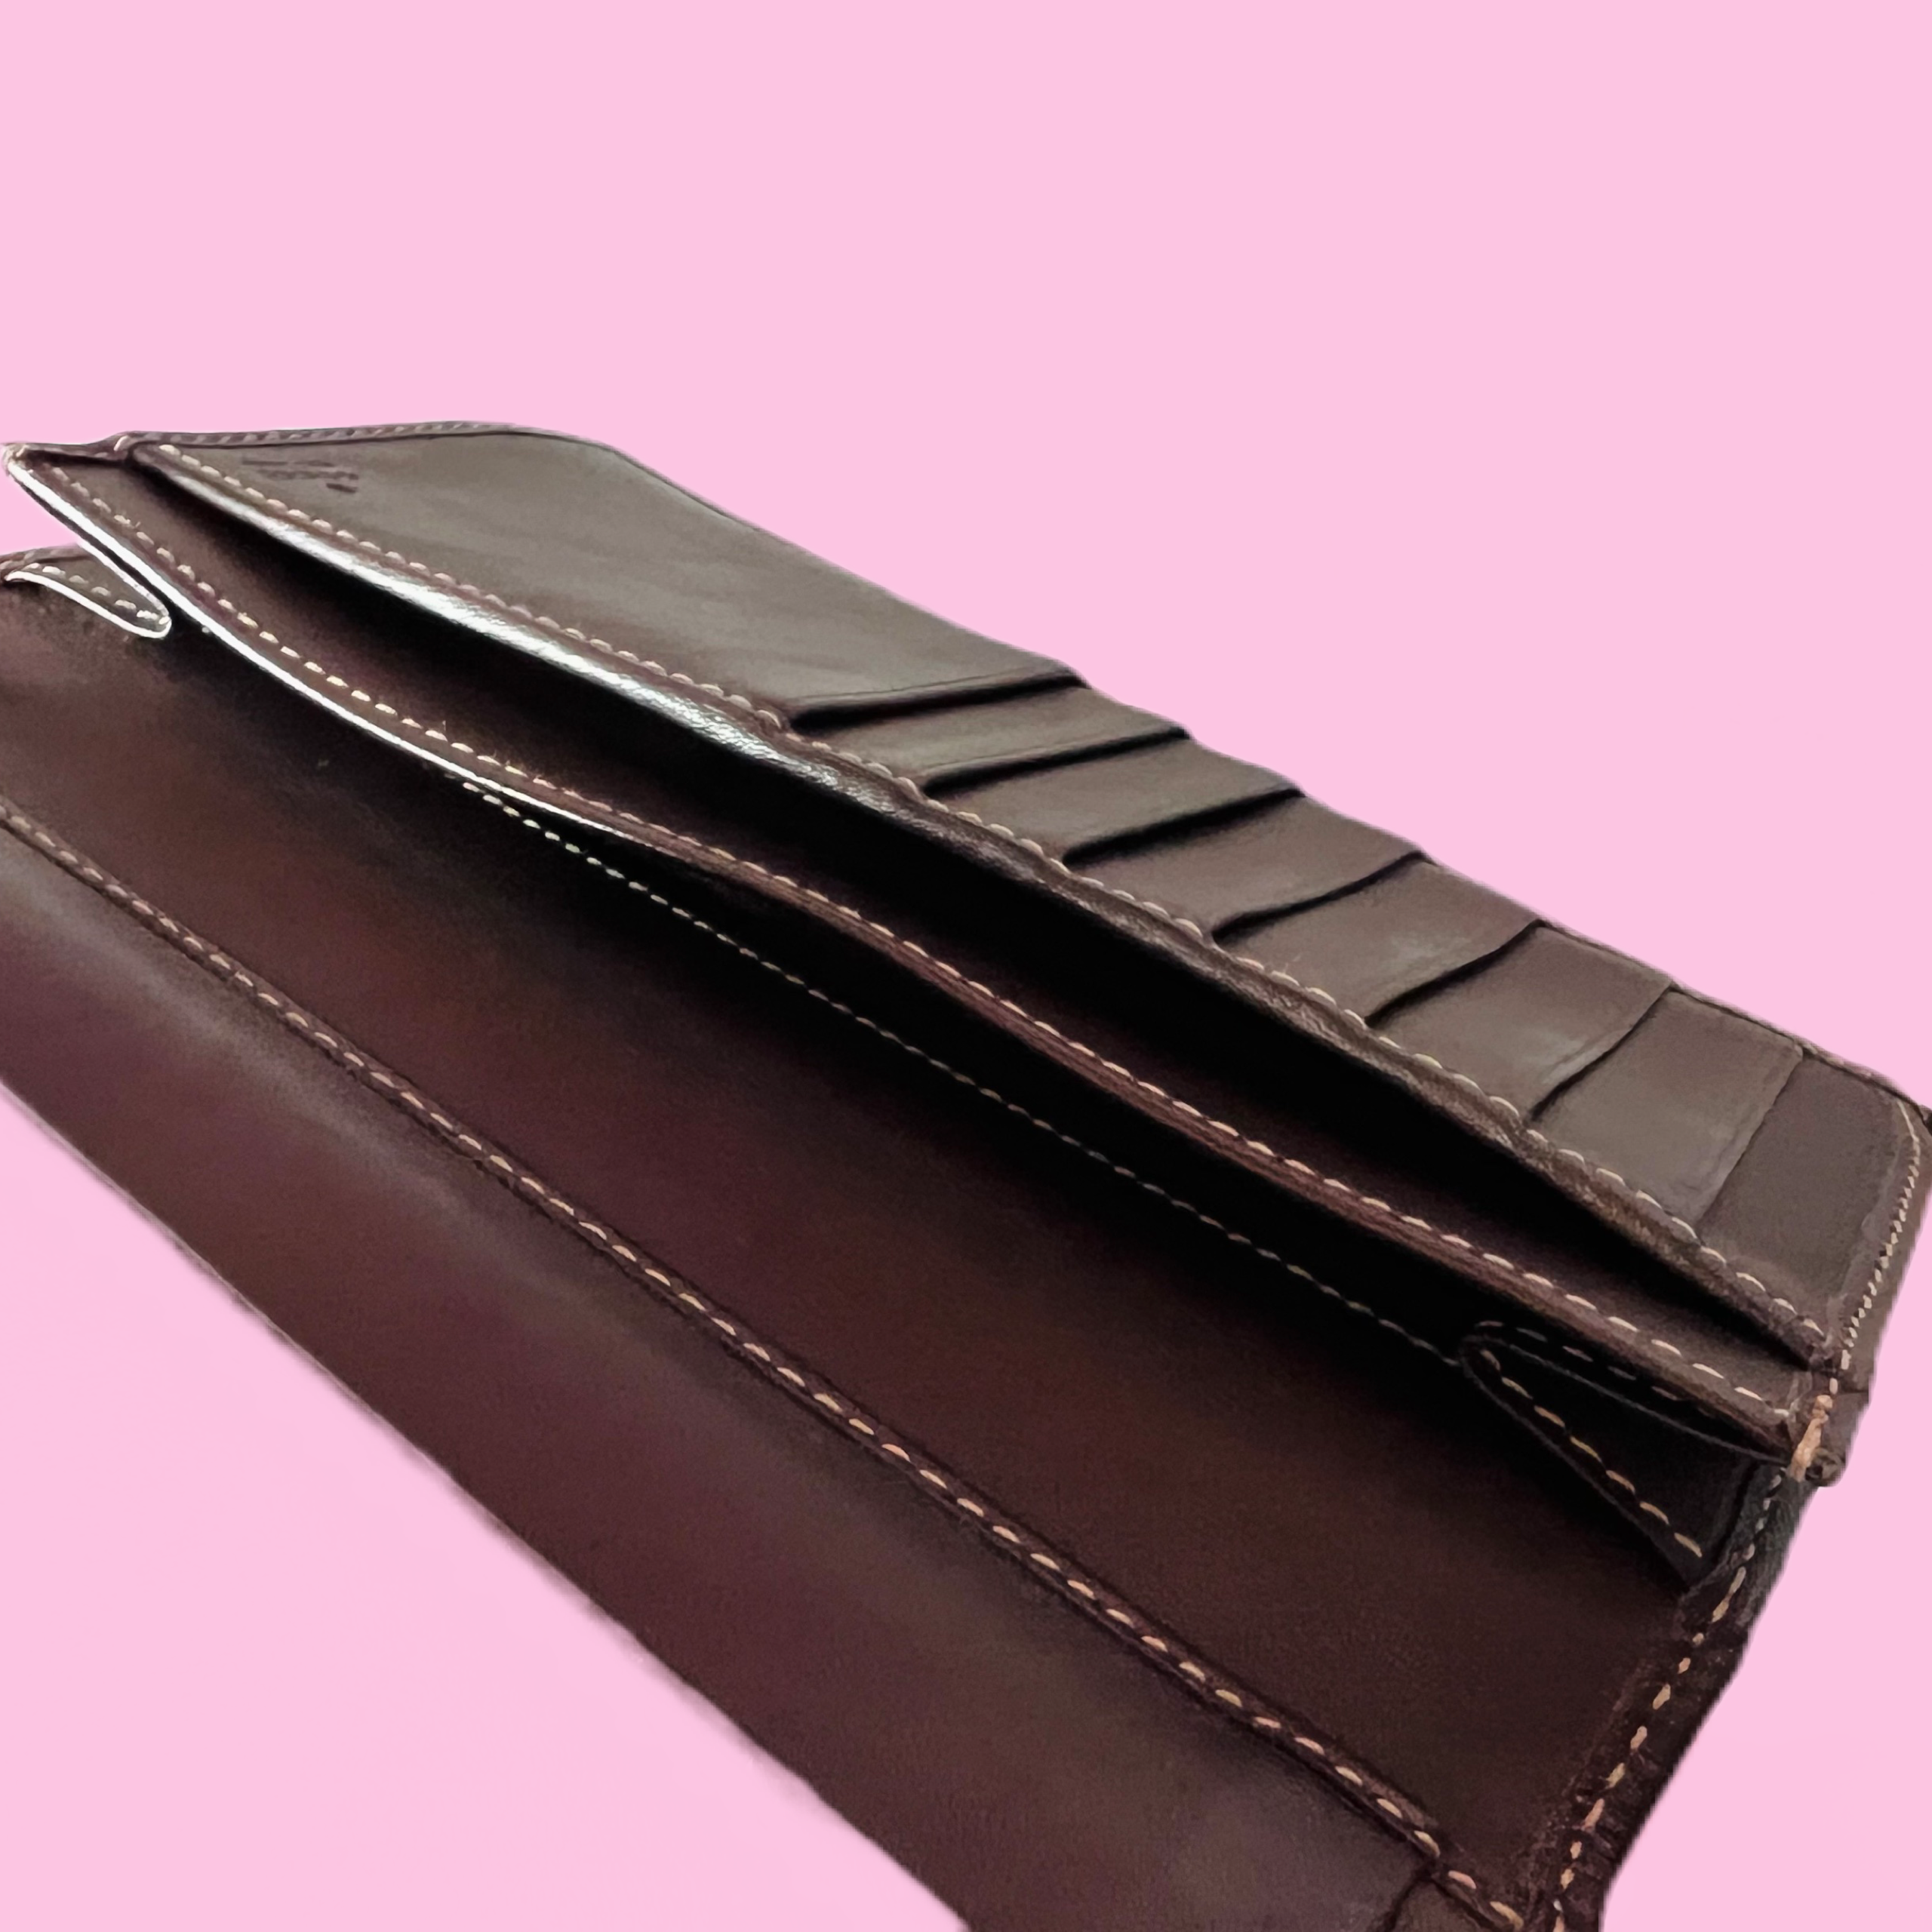 Gucci Brown Vintage Leather Wallet